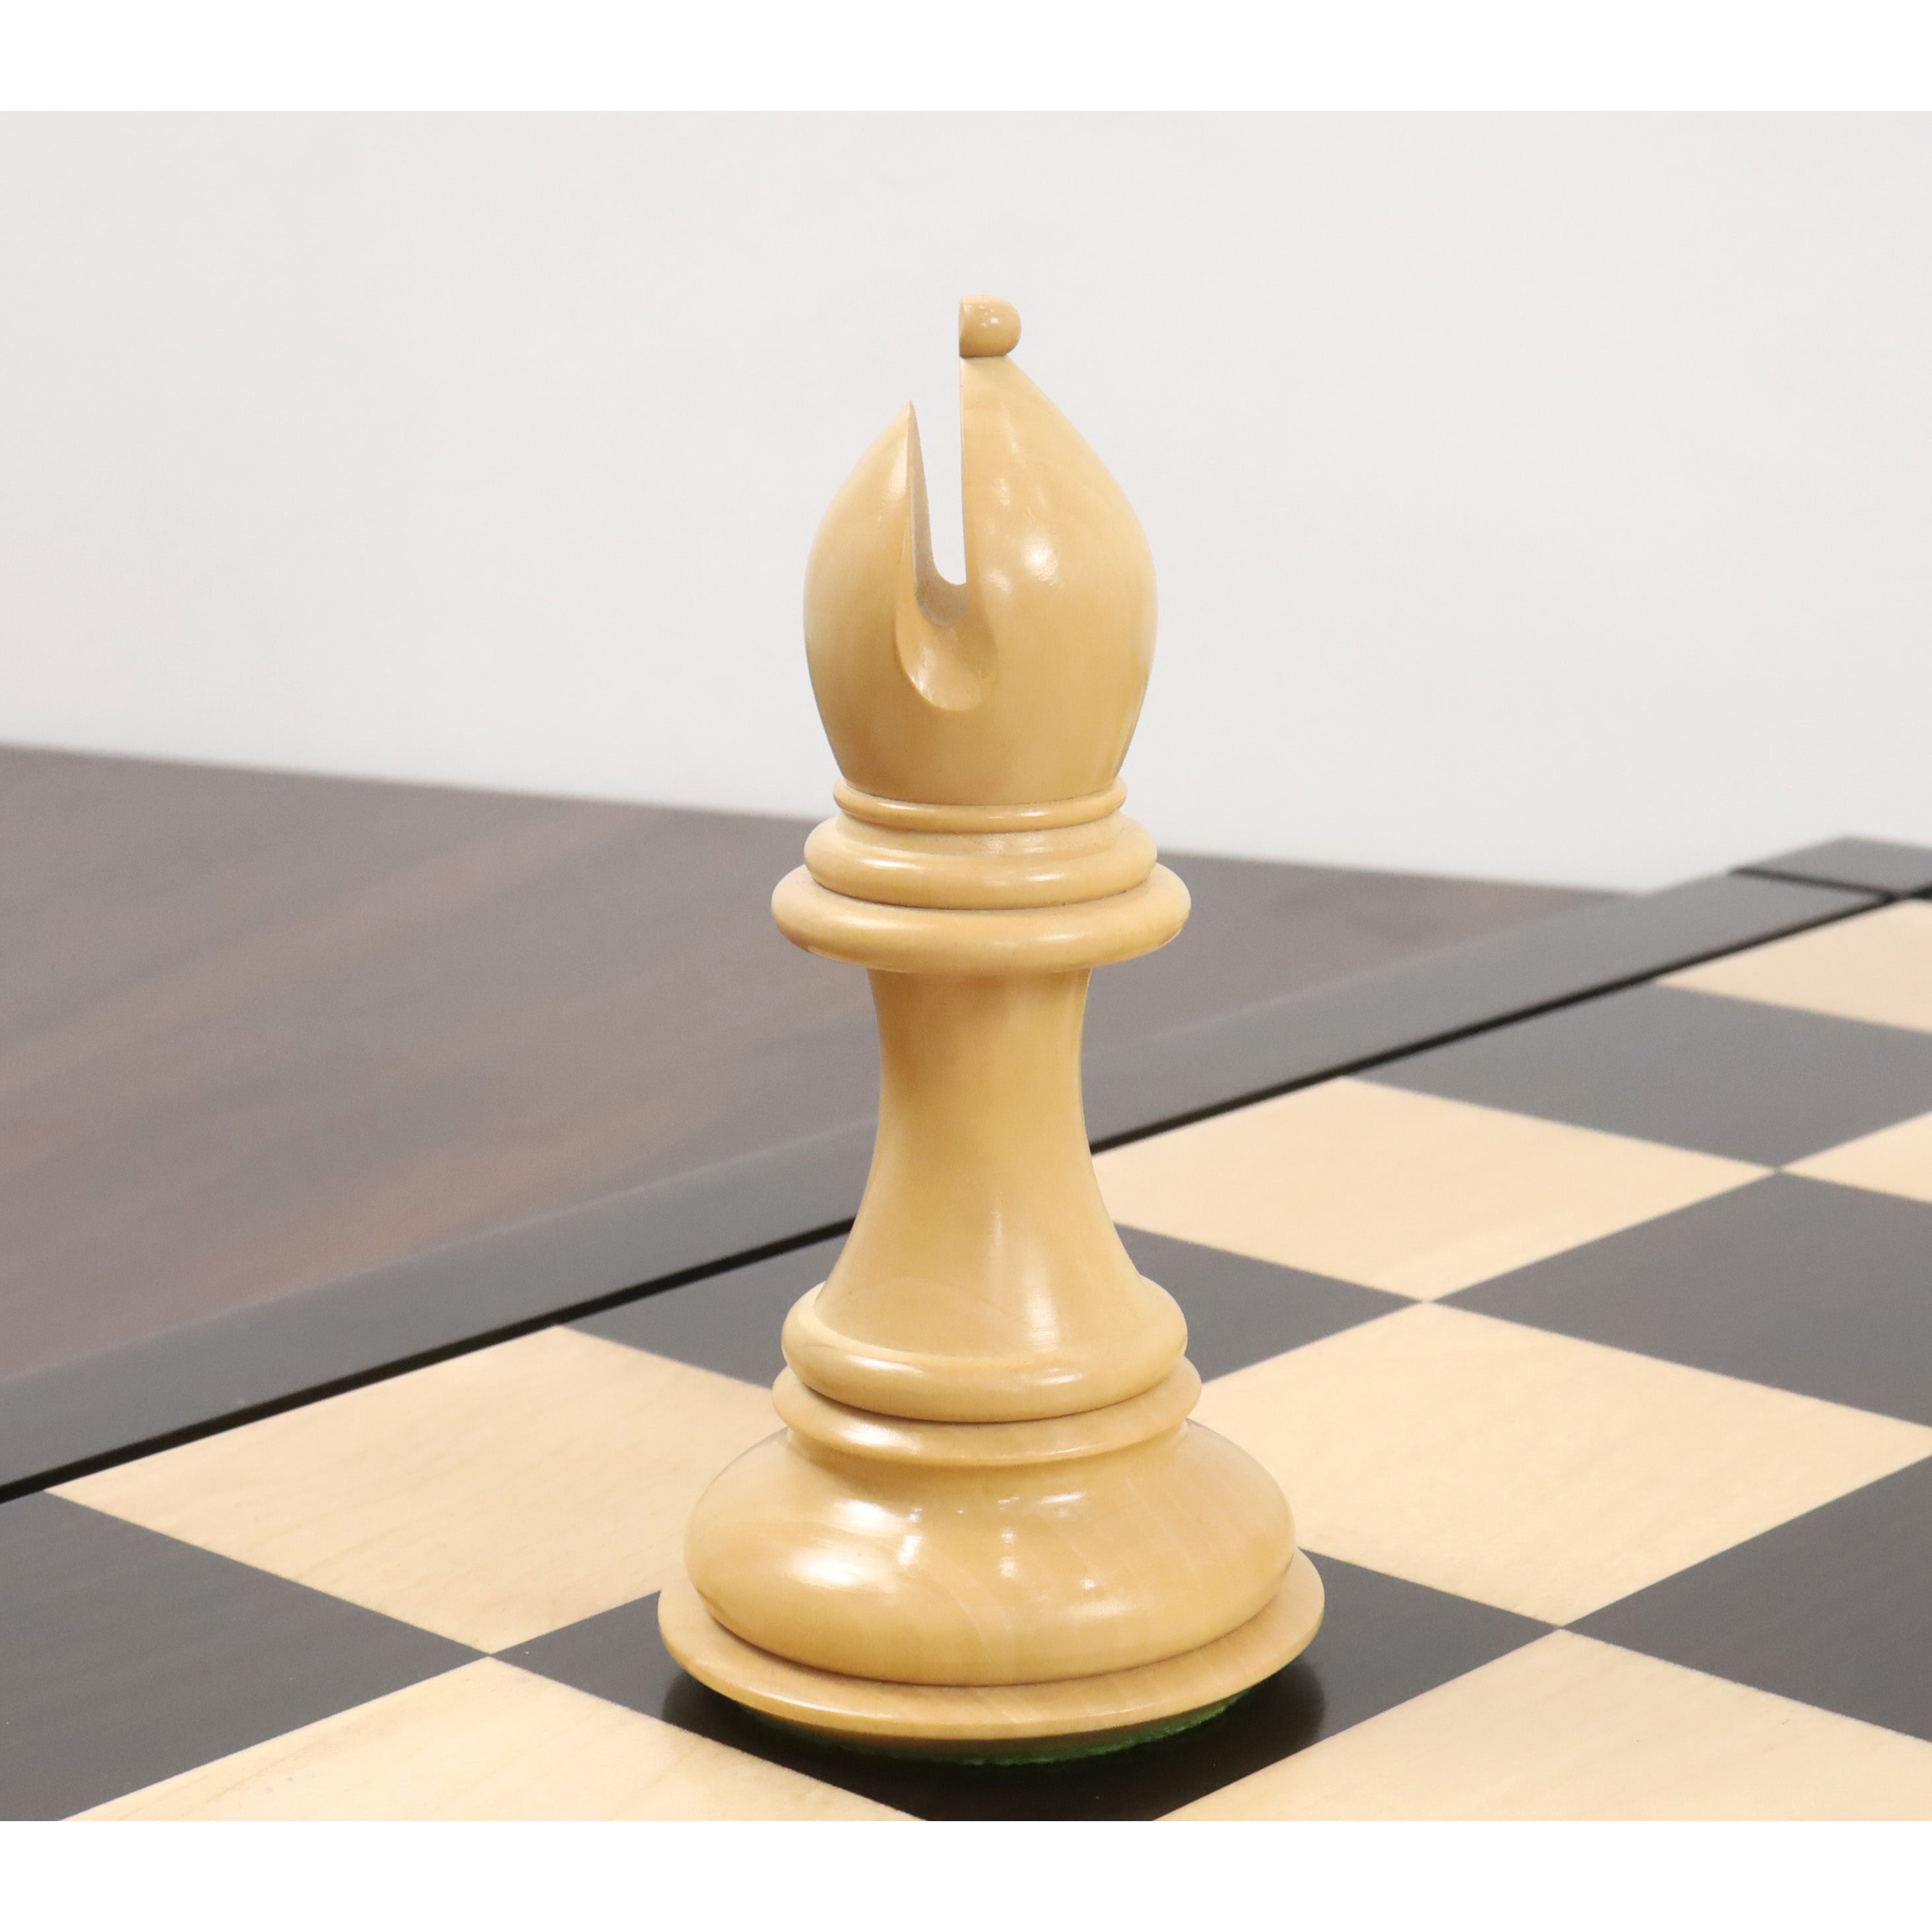 6.1" Mammoth Luxury Staunton Ebony Wood Chess Pieces With 25" Large Players' Drueke Style Ebony Wood & Maple Chessboard